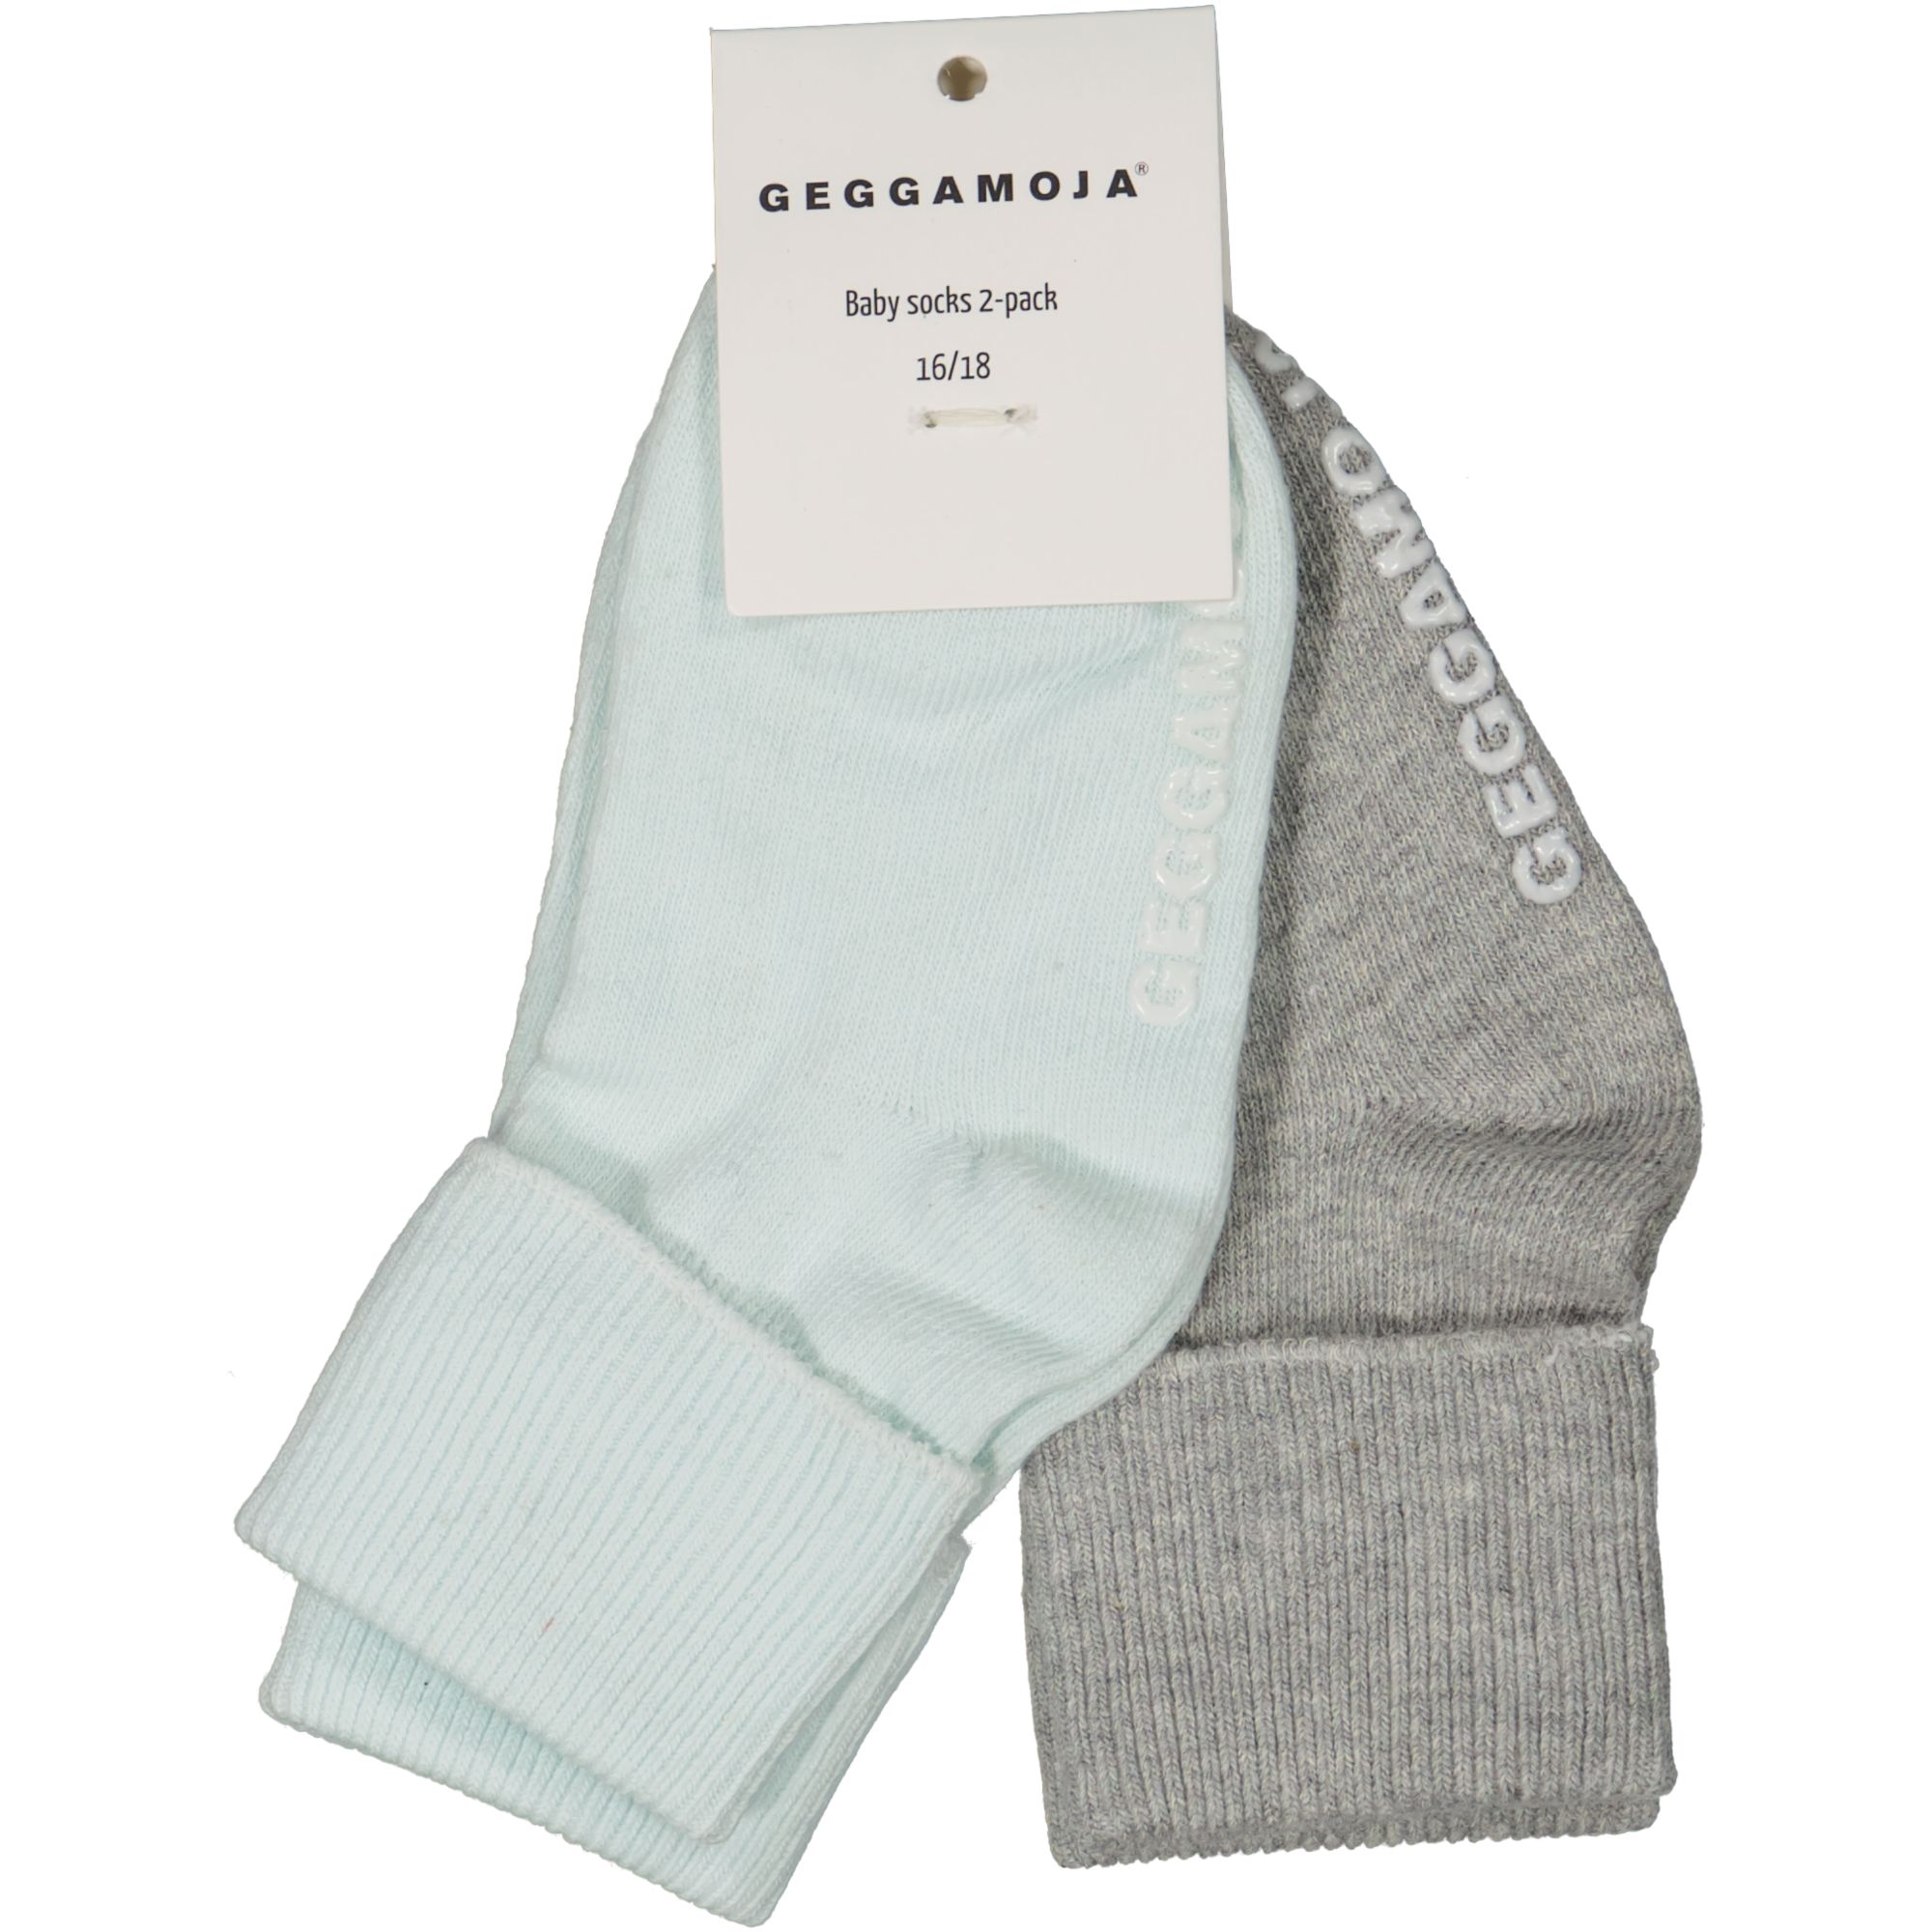 Baby socks 2-pack Grey/green